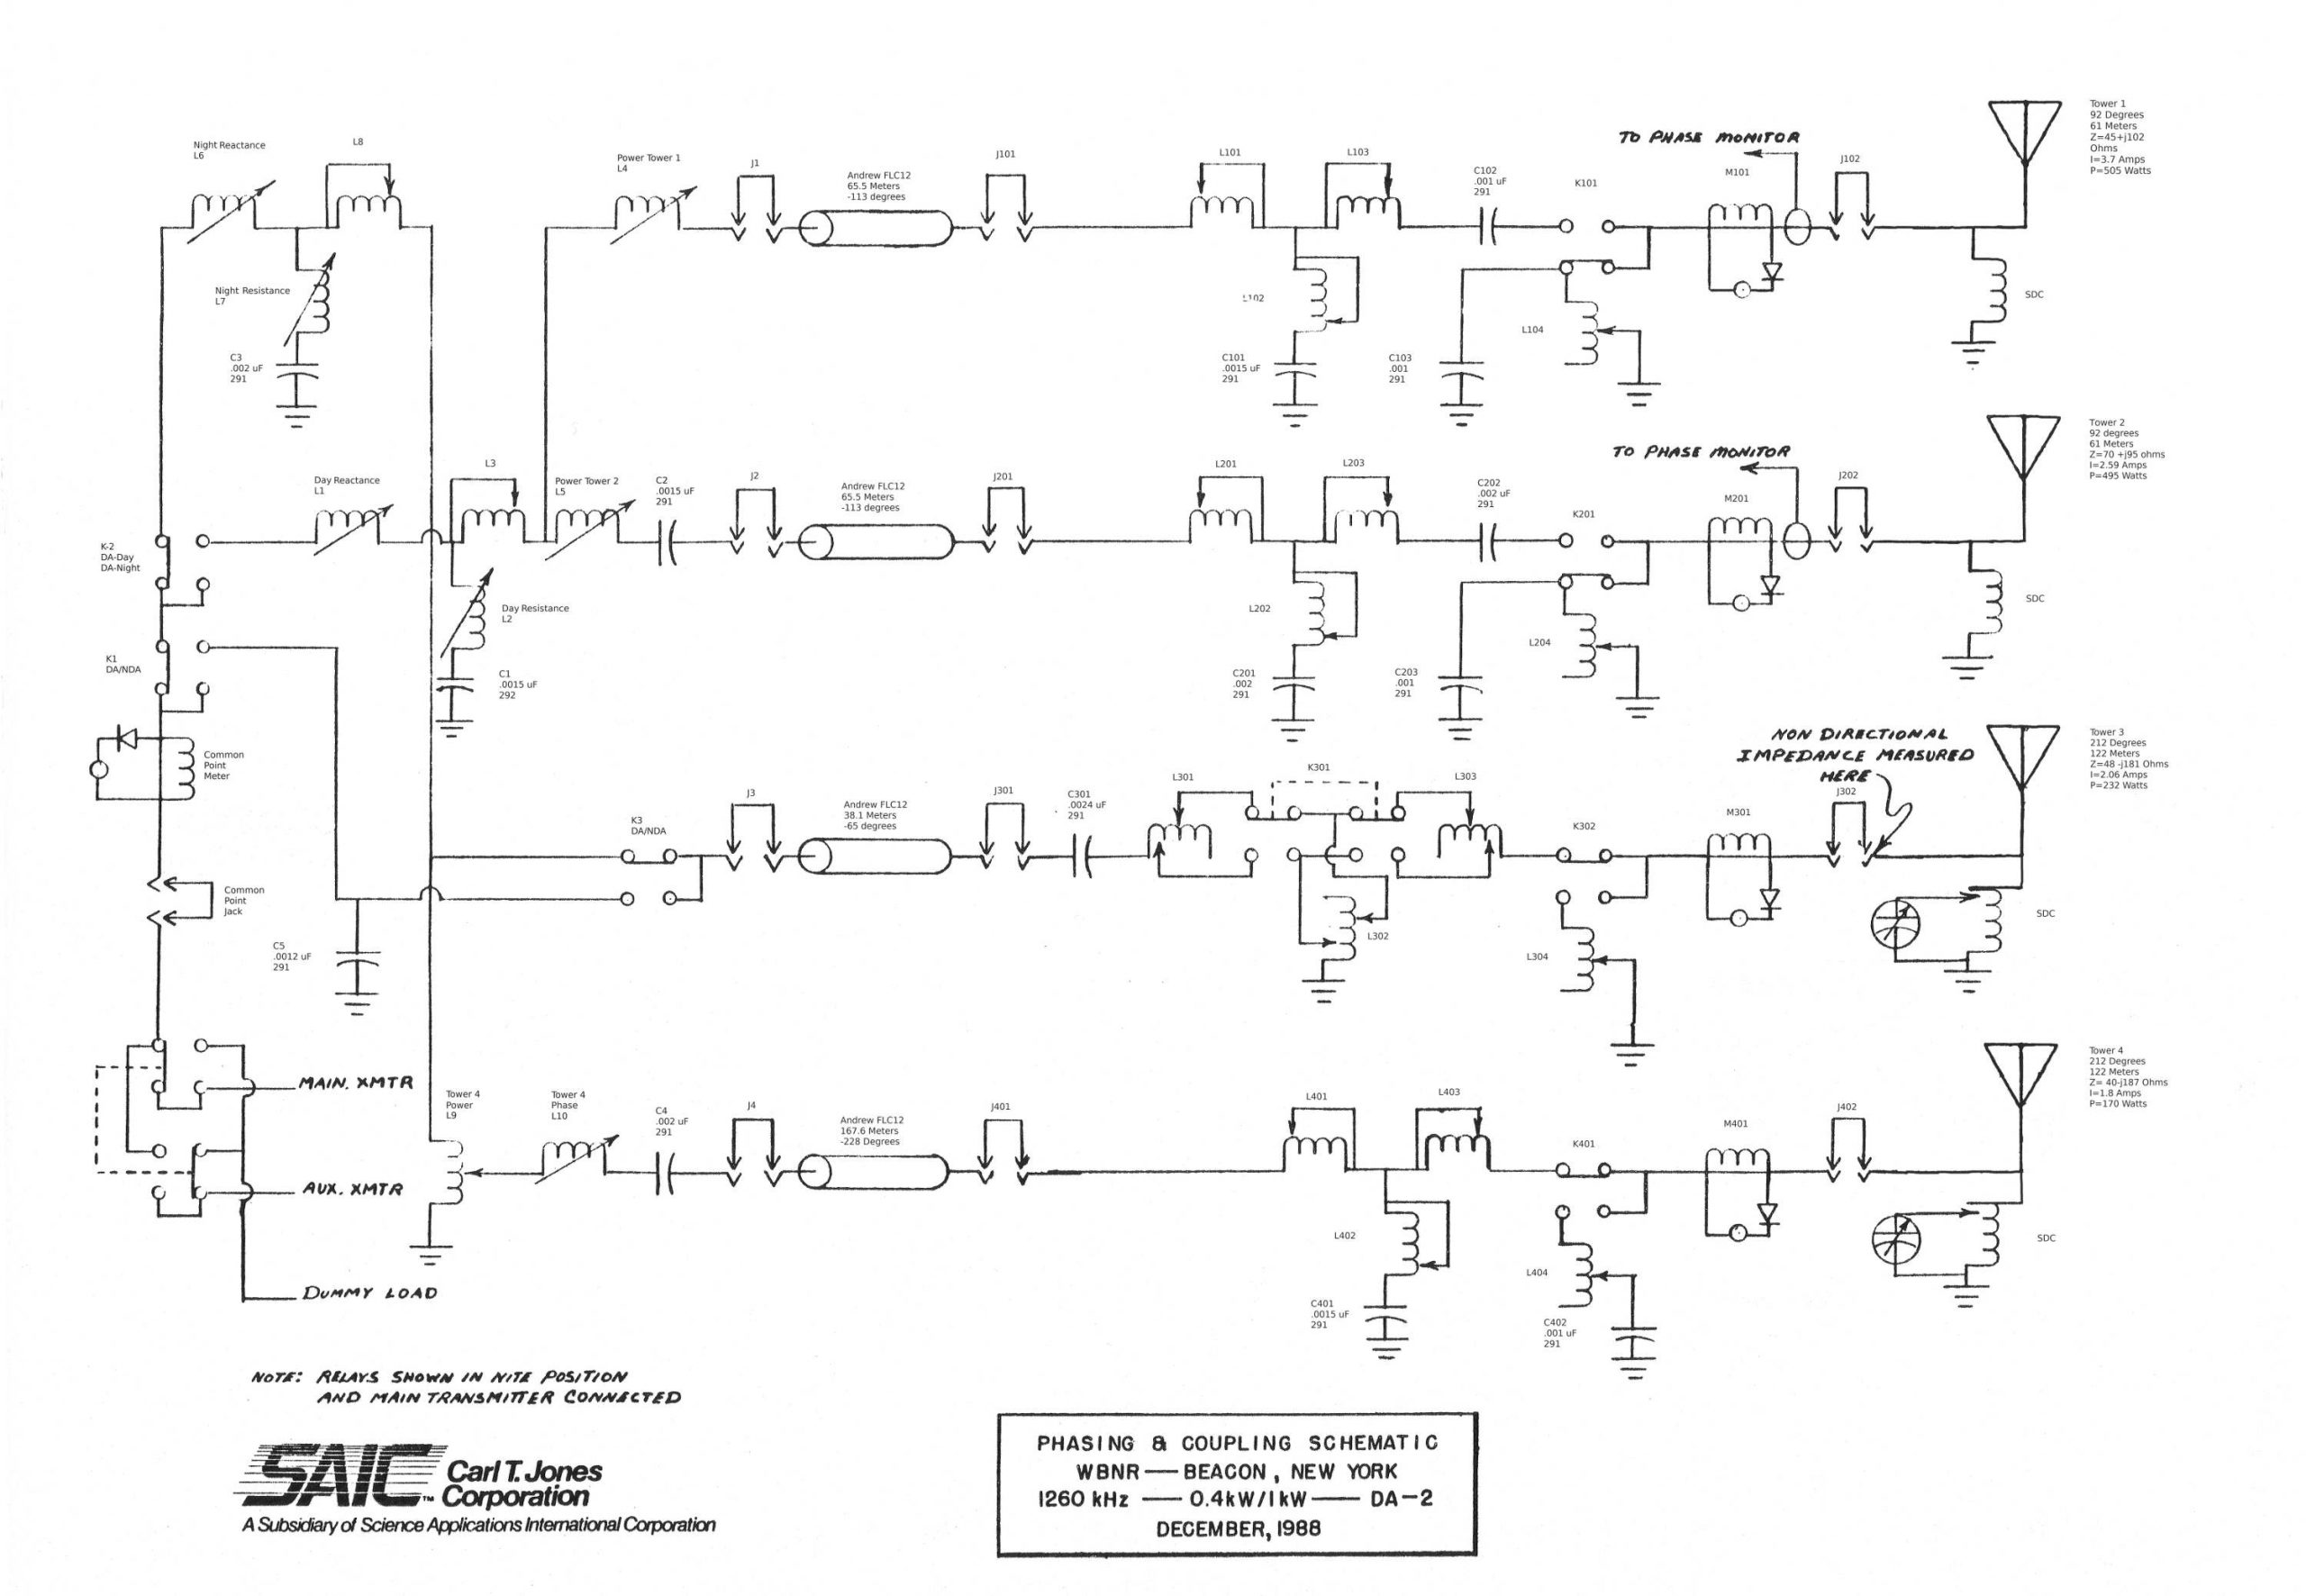 Schematic diagram WBNR day/night antenna systems